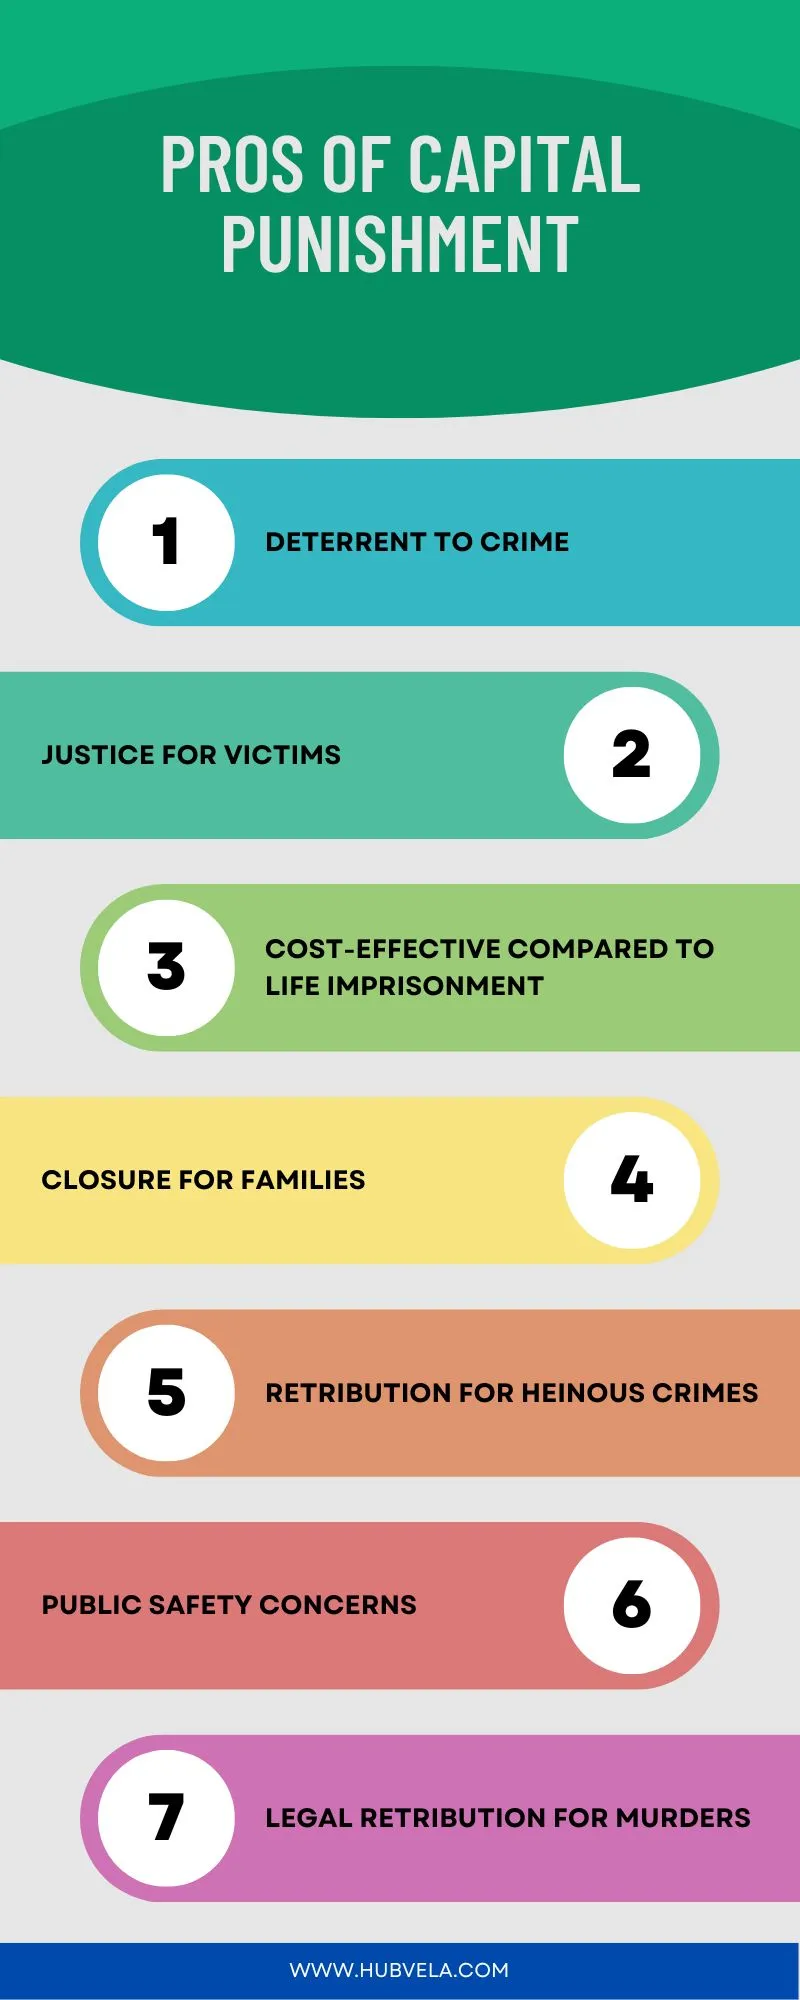 Pros of Capital Punishment Infographic